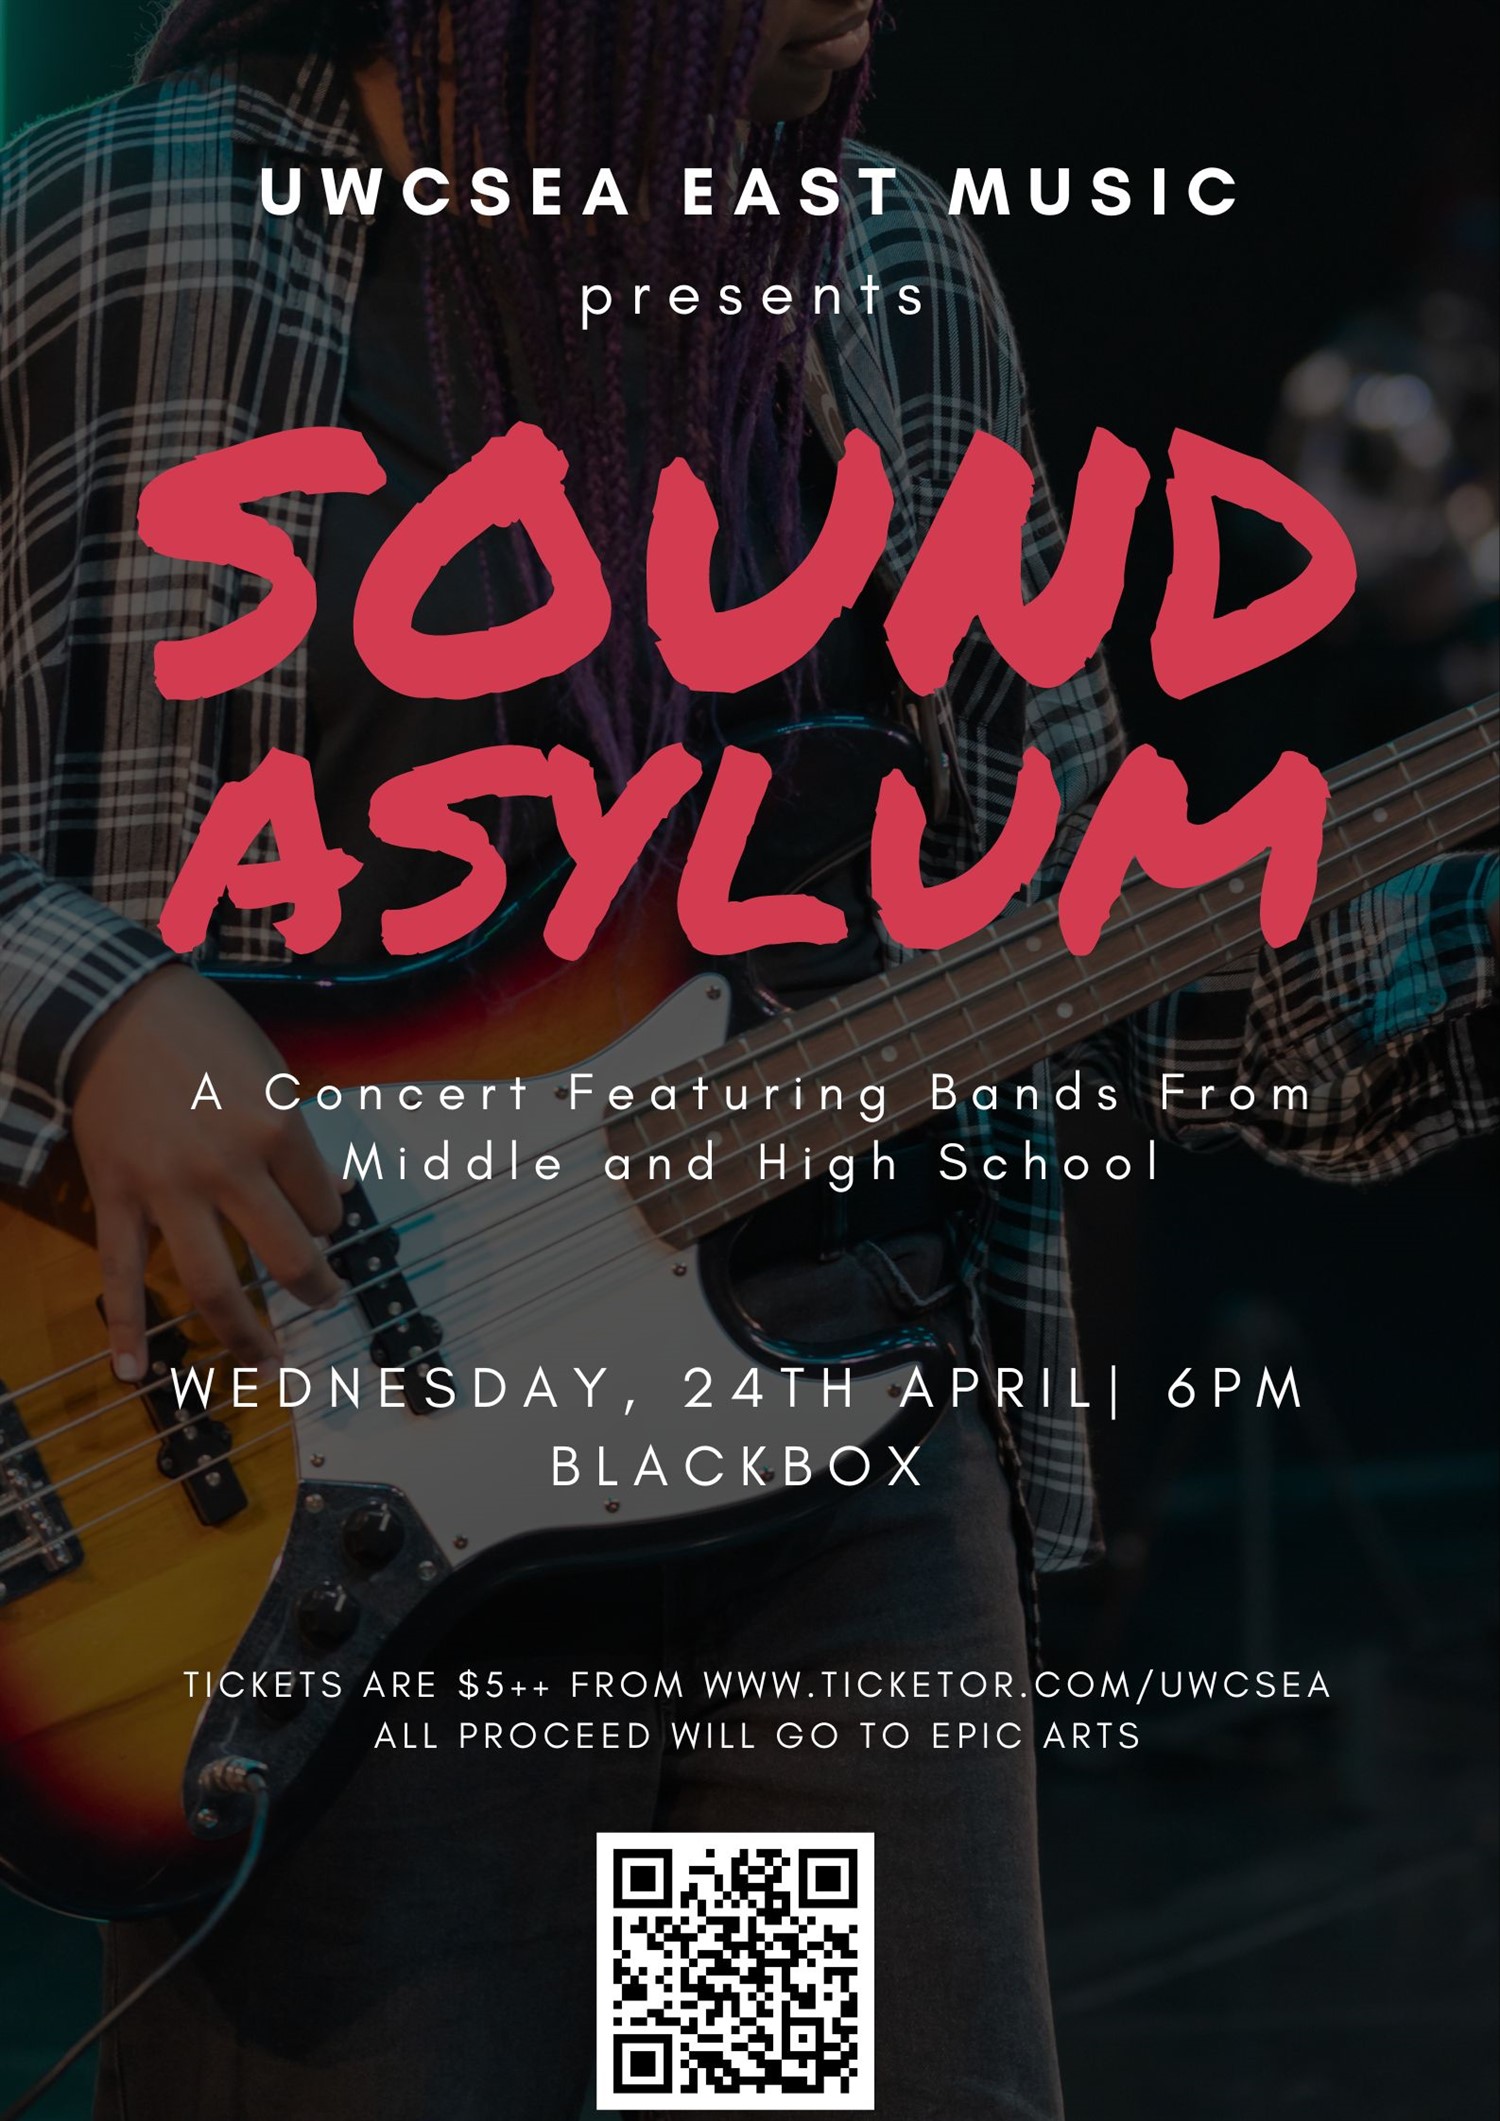 UWCSEA East Music Presents : Sound Asylum (GC00000061)  on Apr 24, 18:00@Black Box @ UWCSEA East - Buy tickets and Get information on UWCSEA Ticket Hub uwcsea